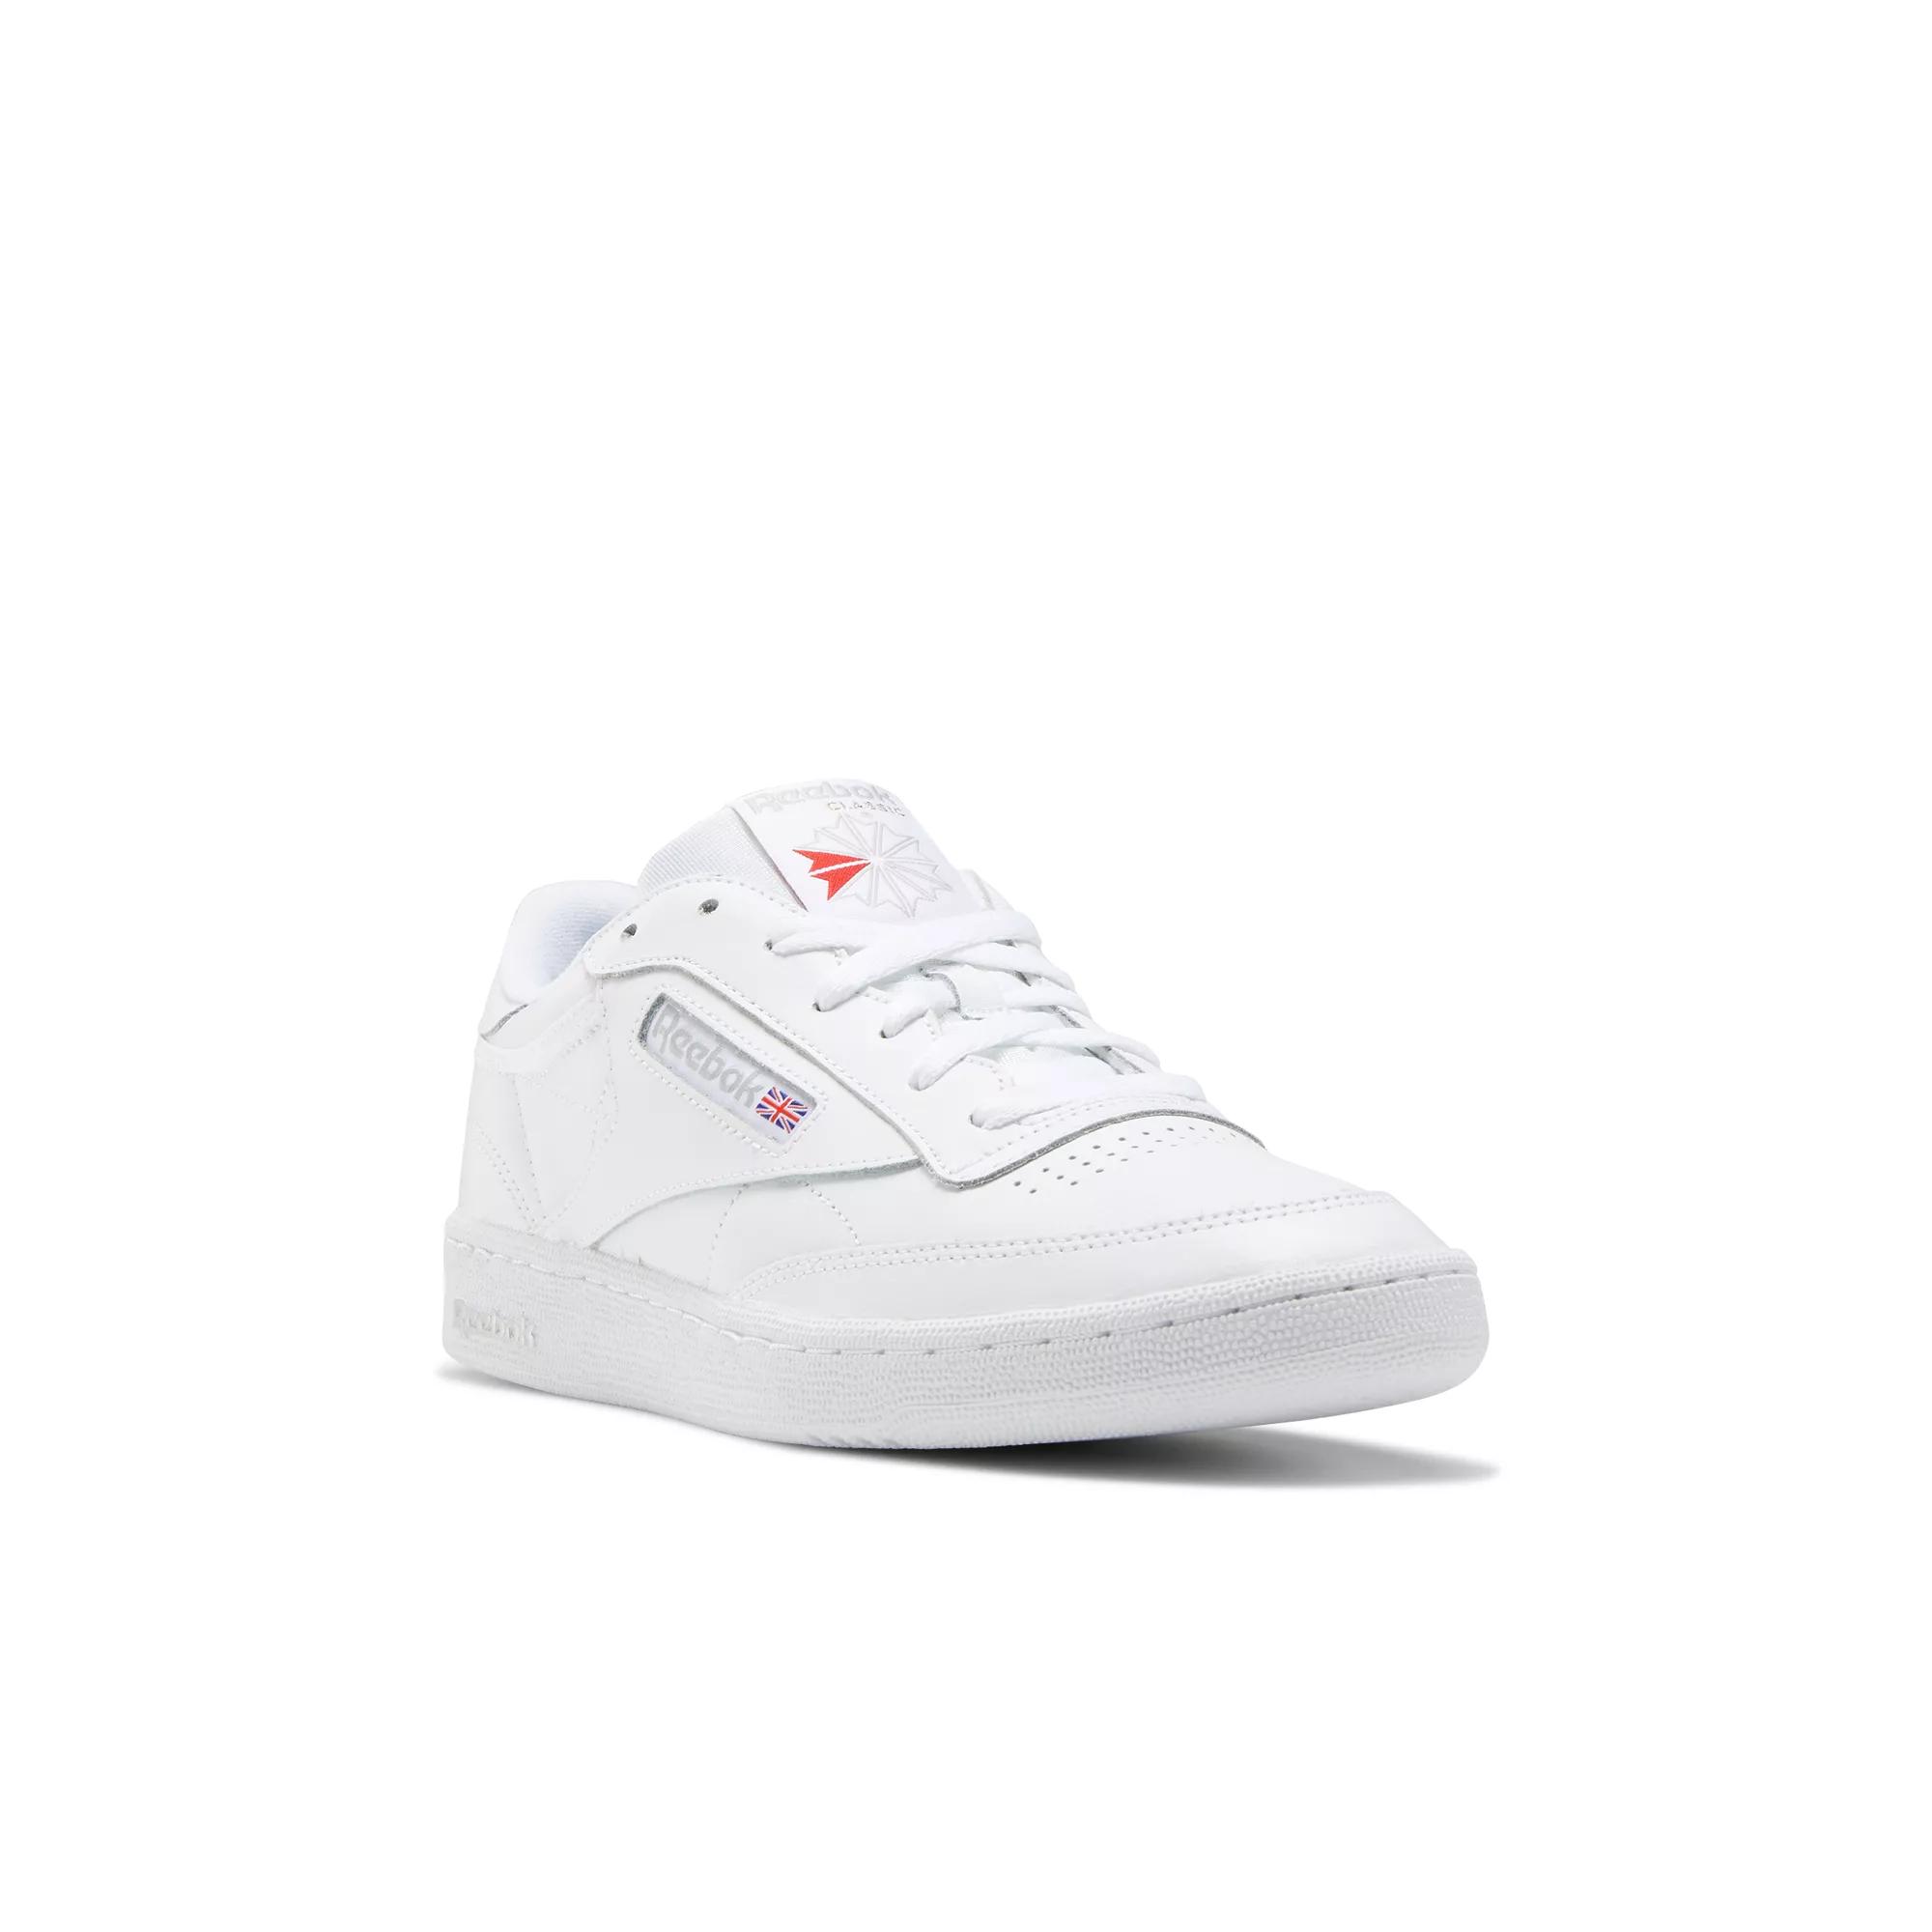 Reebok Club C 85 Men’s Athletic Sneaker Tennis White Shoe Trainers #155 #456